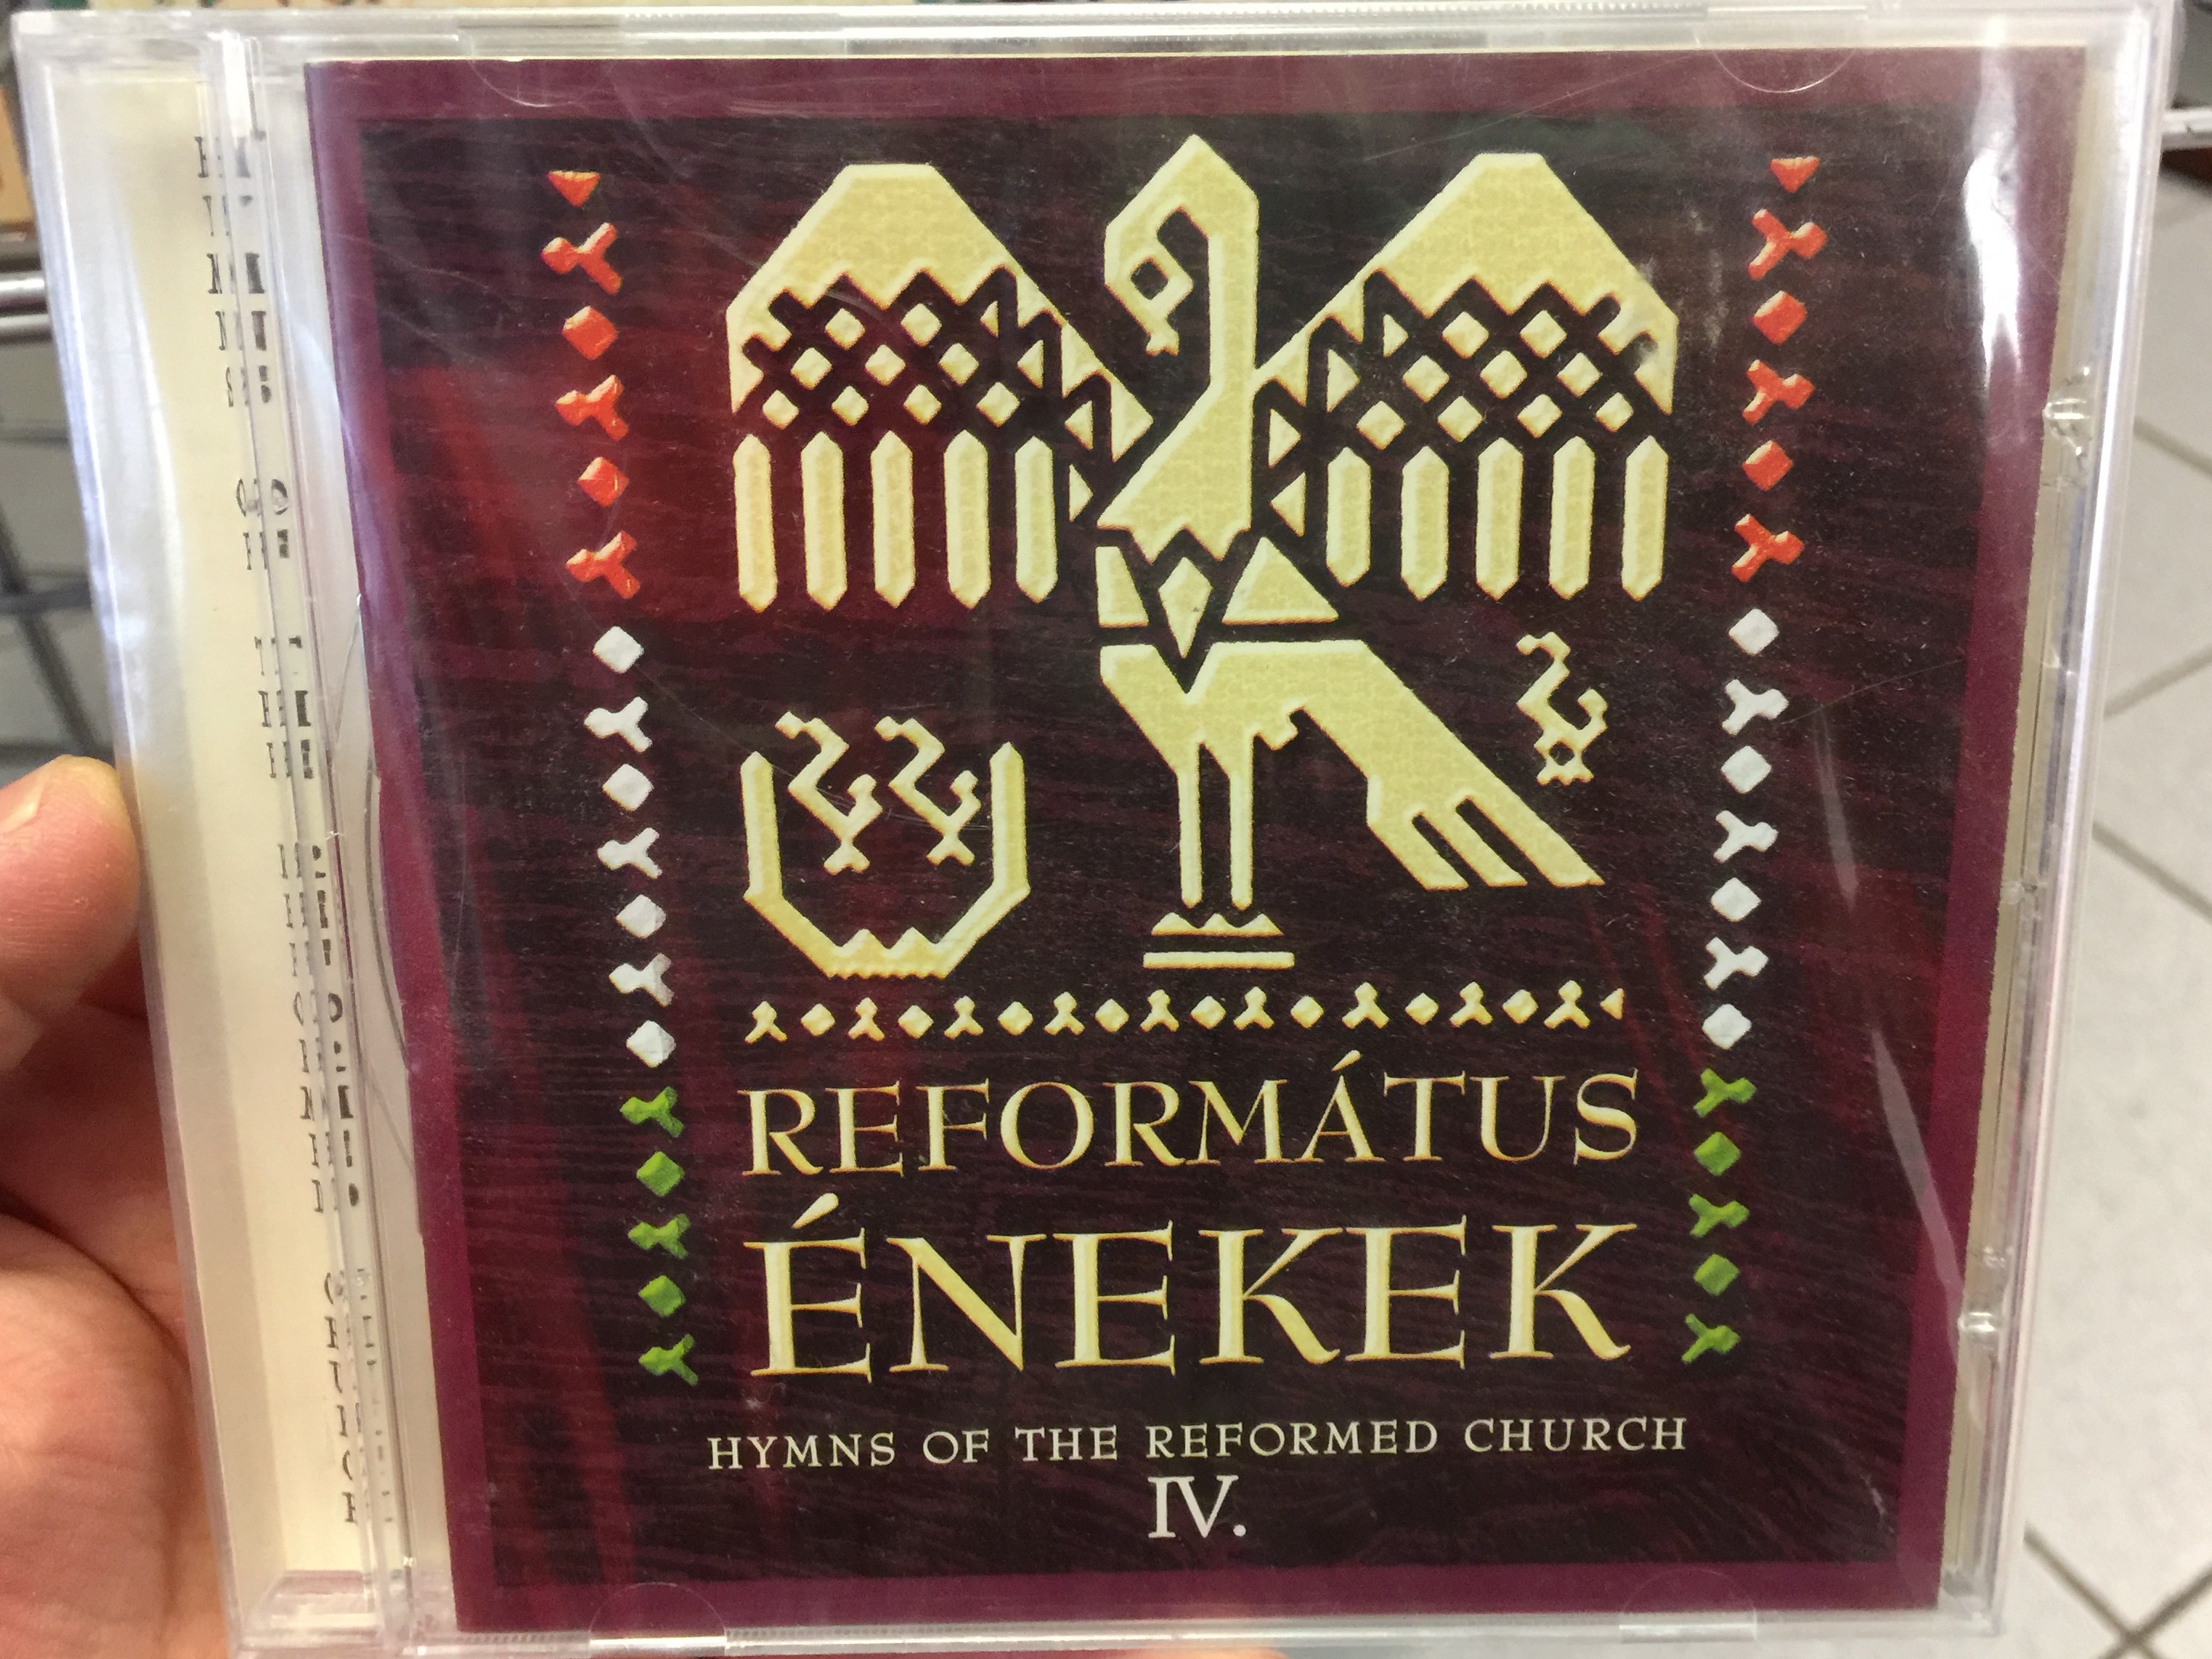 reform-tus-nekek-4.-audio-cd-2005-hymns-of-the-reformed-church-iv.-1.jpg